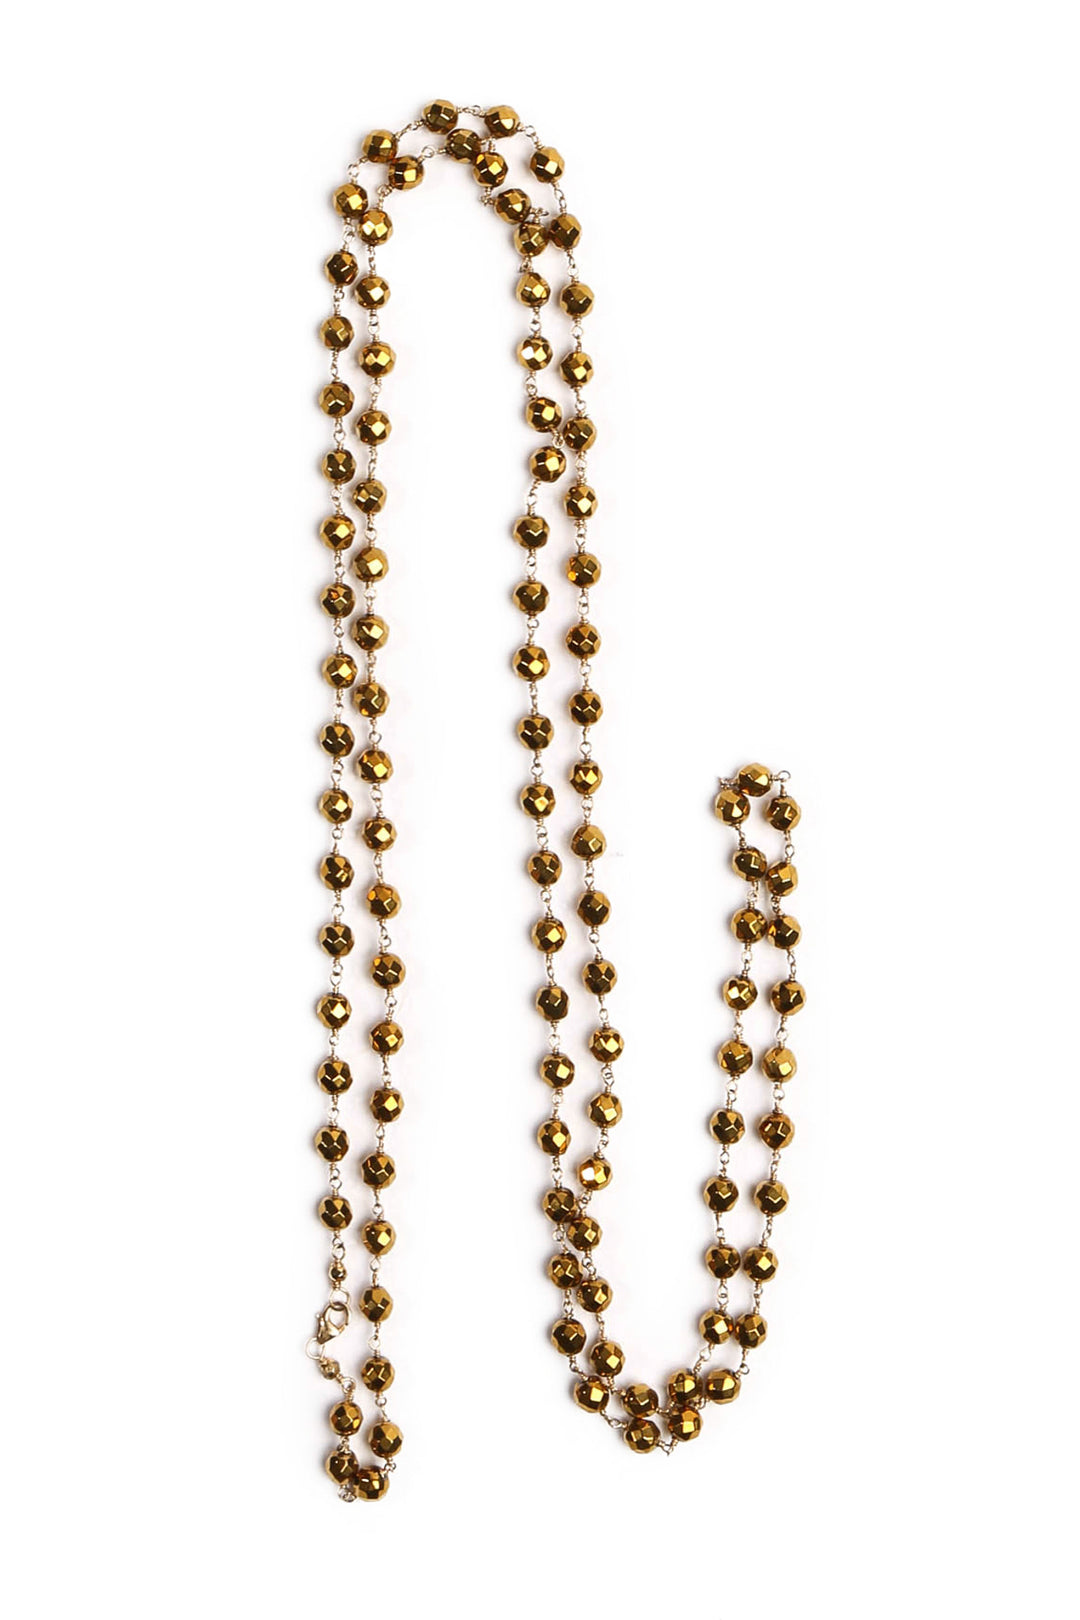 Jocelyn Kennedy Swarovski Chanel Necklace